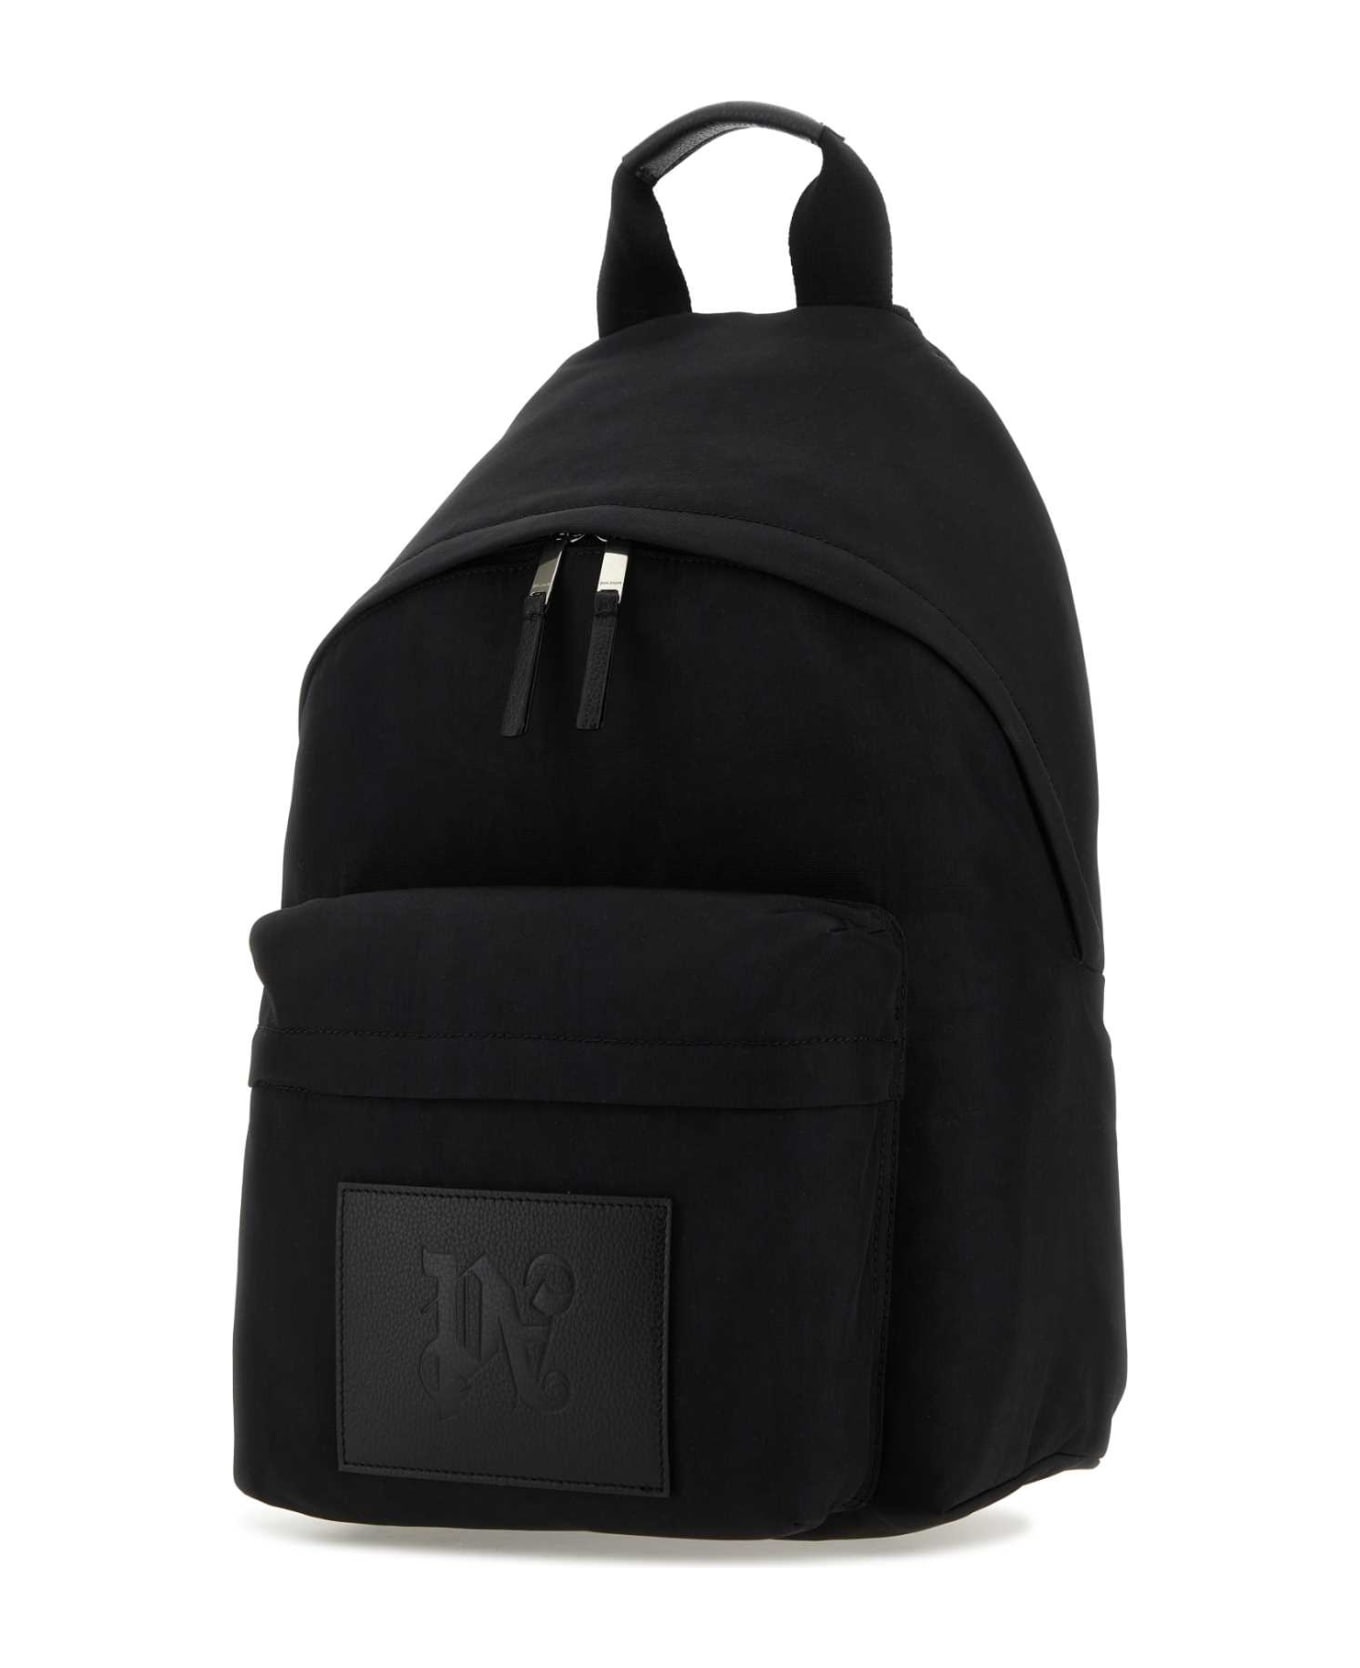 Black Canvas Backpack - 1